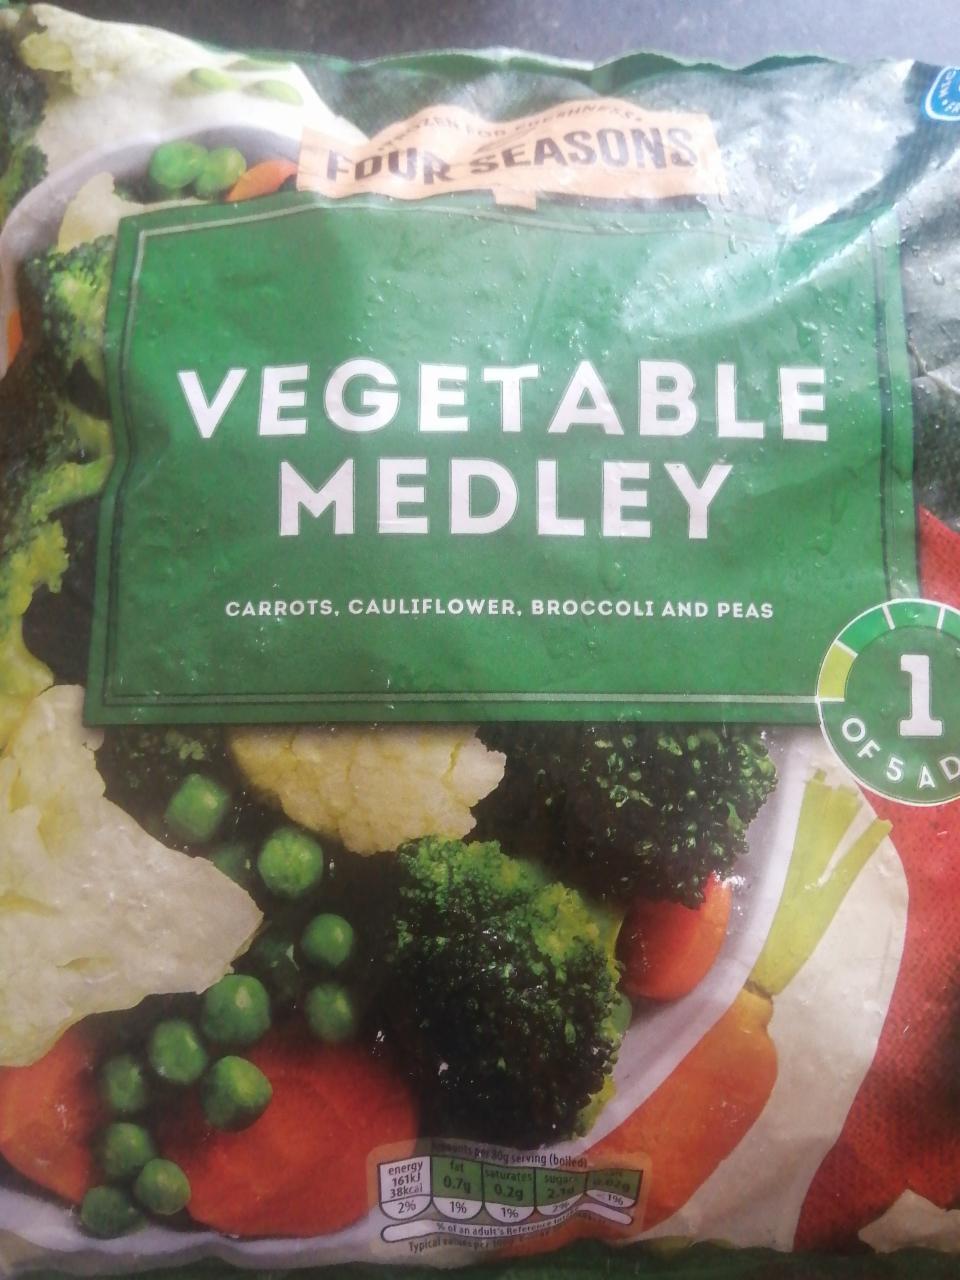 Zdjęcia - Vegetable medley Four seasons